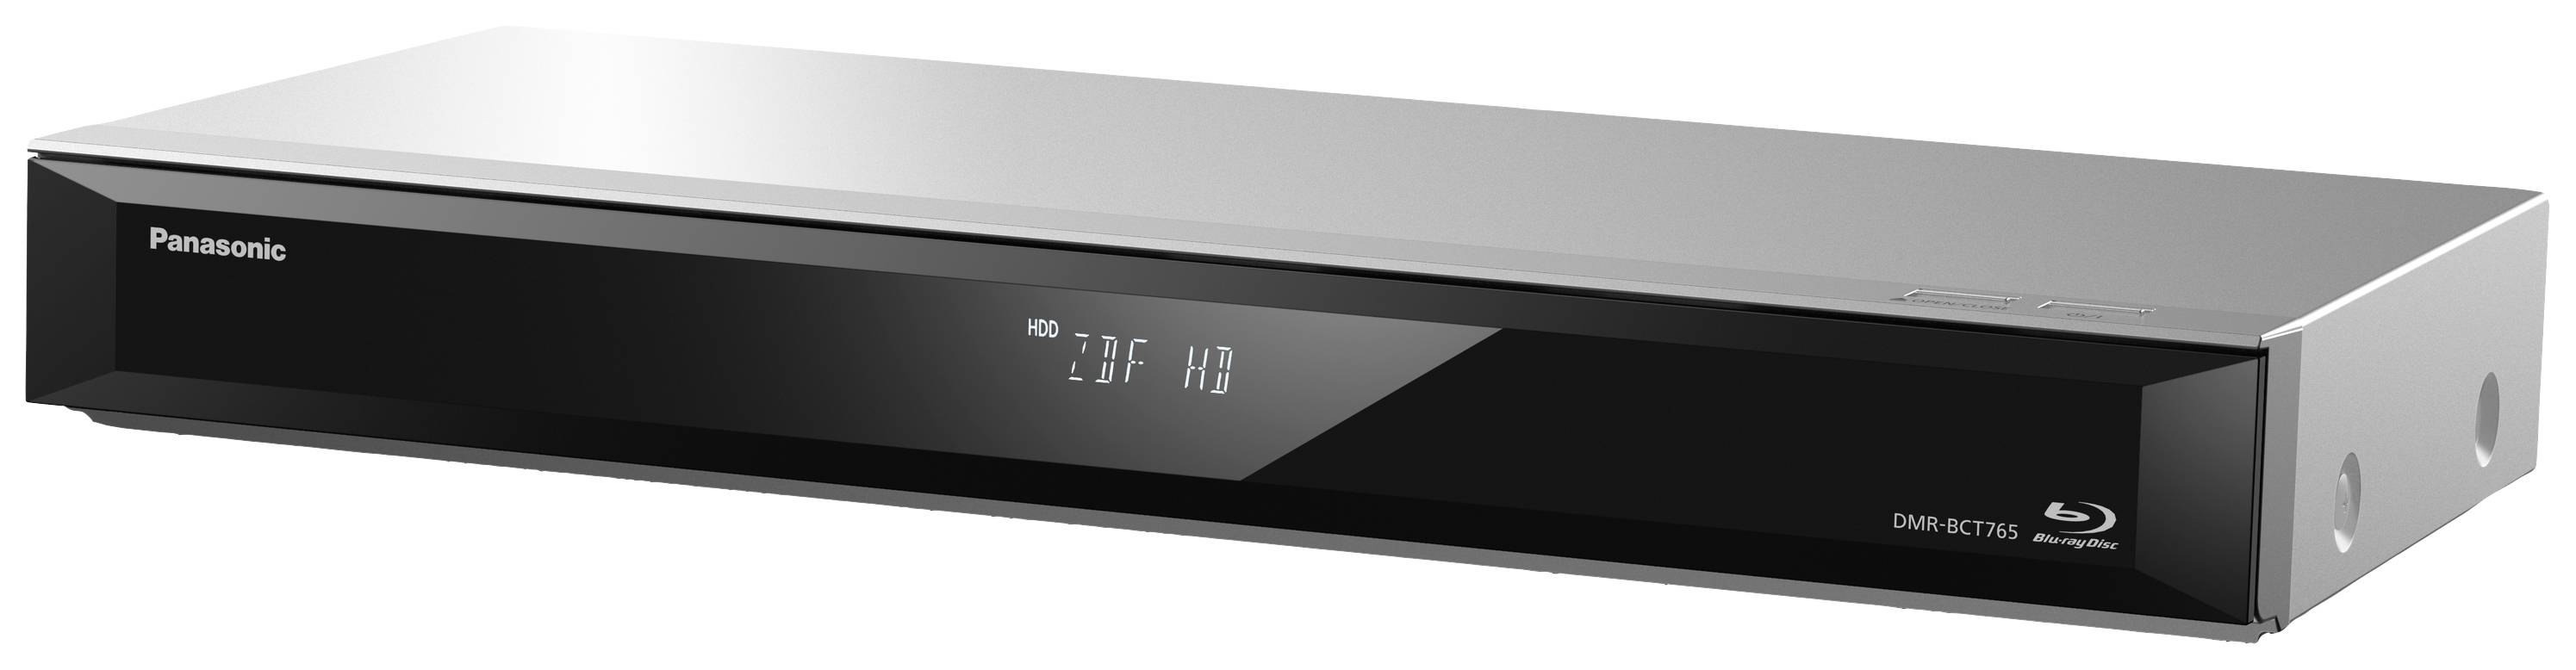 Panasonic DMR-BCT765AG Blu-ray-Player mit Festplattenrecorder 500 GB 4K  Upscaling, CD-Player, High-Resolution Audio, Twi kaufen